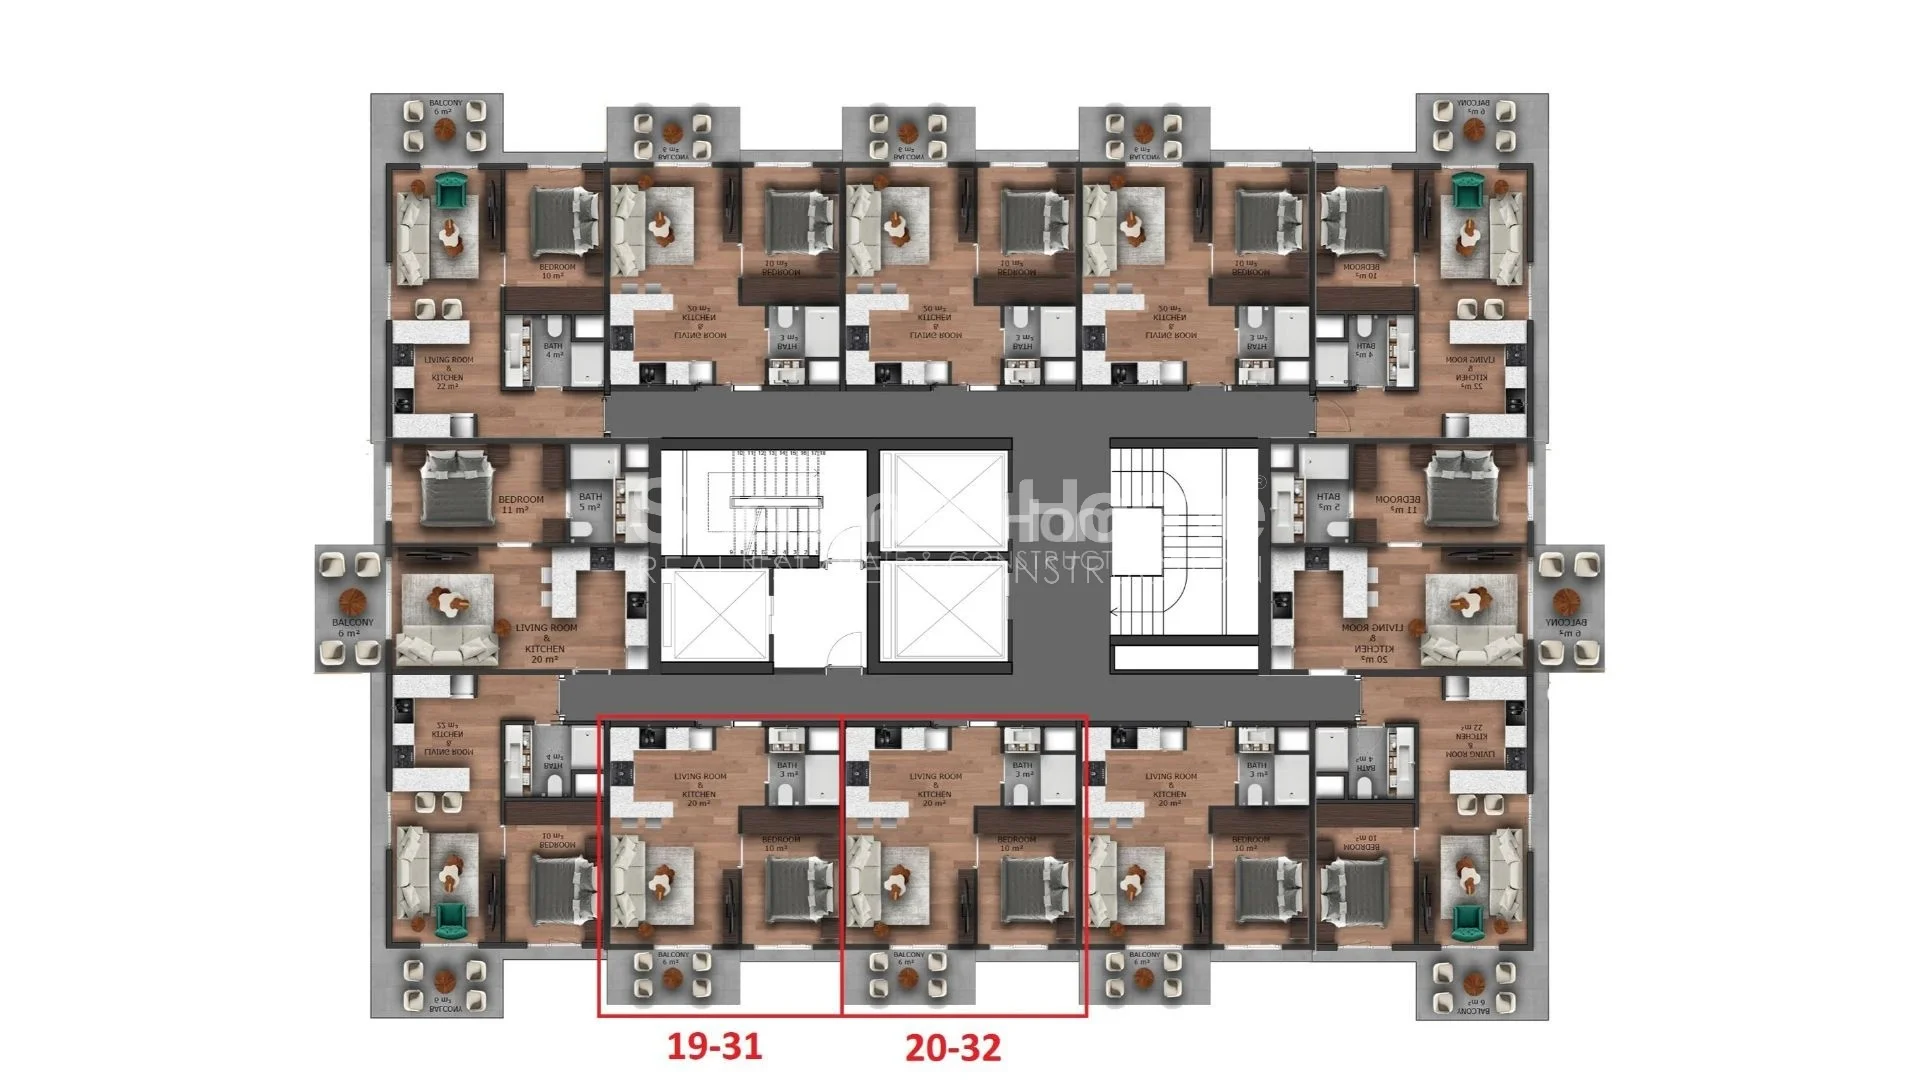 Appealing one bedroomed apartments in Mezitli, Mersin Plan - 25